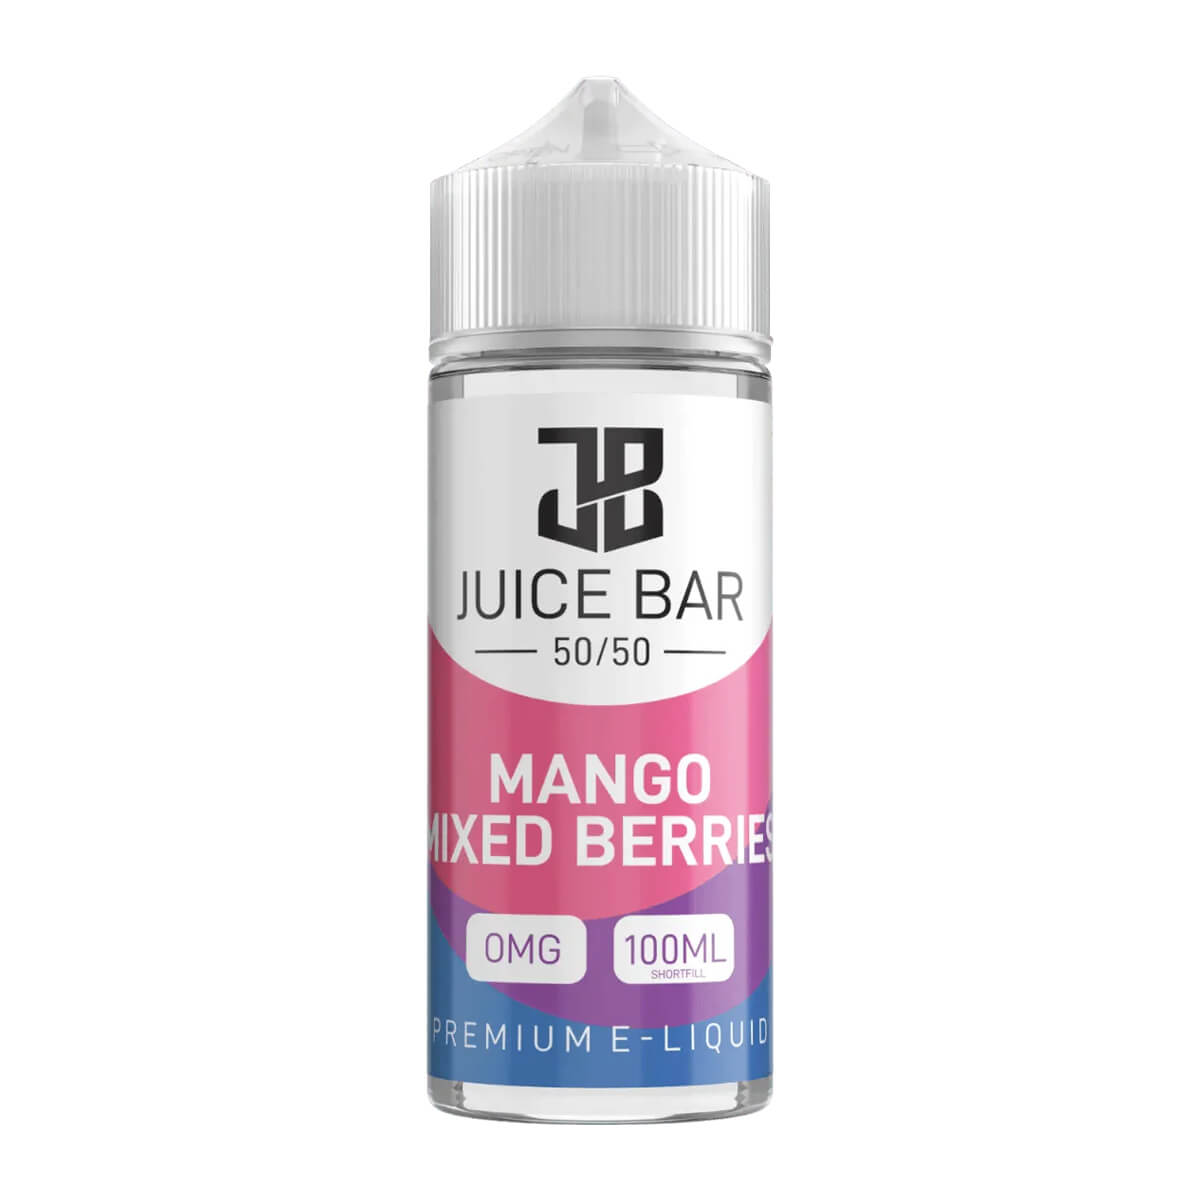 Mango Mixed Berries 100ml Shortfill E-Liquid by Juice Bar